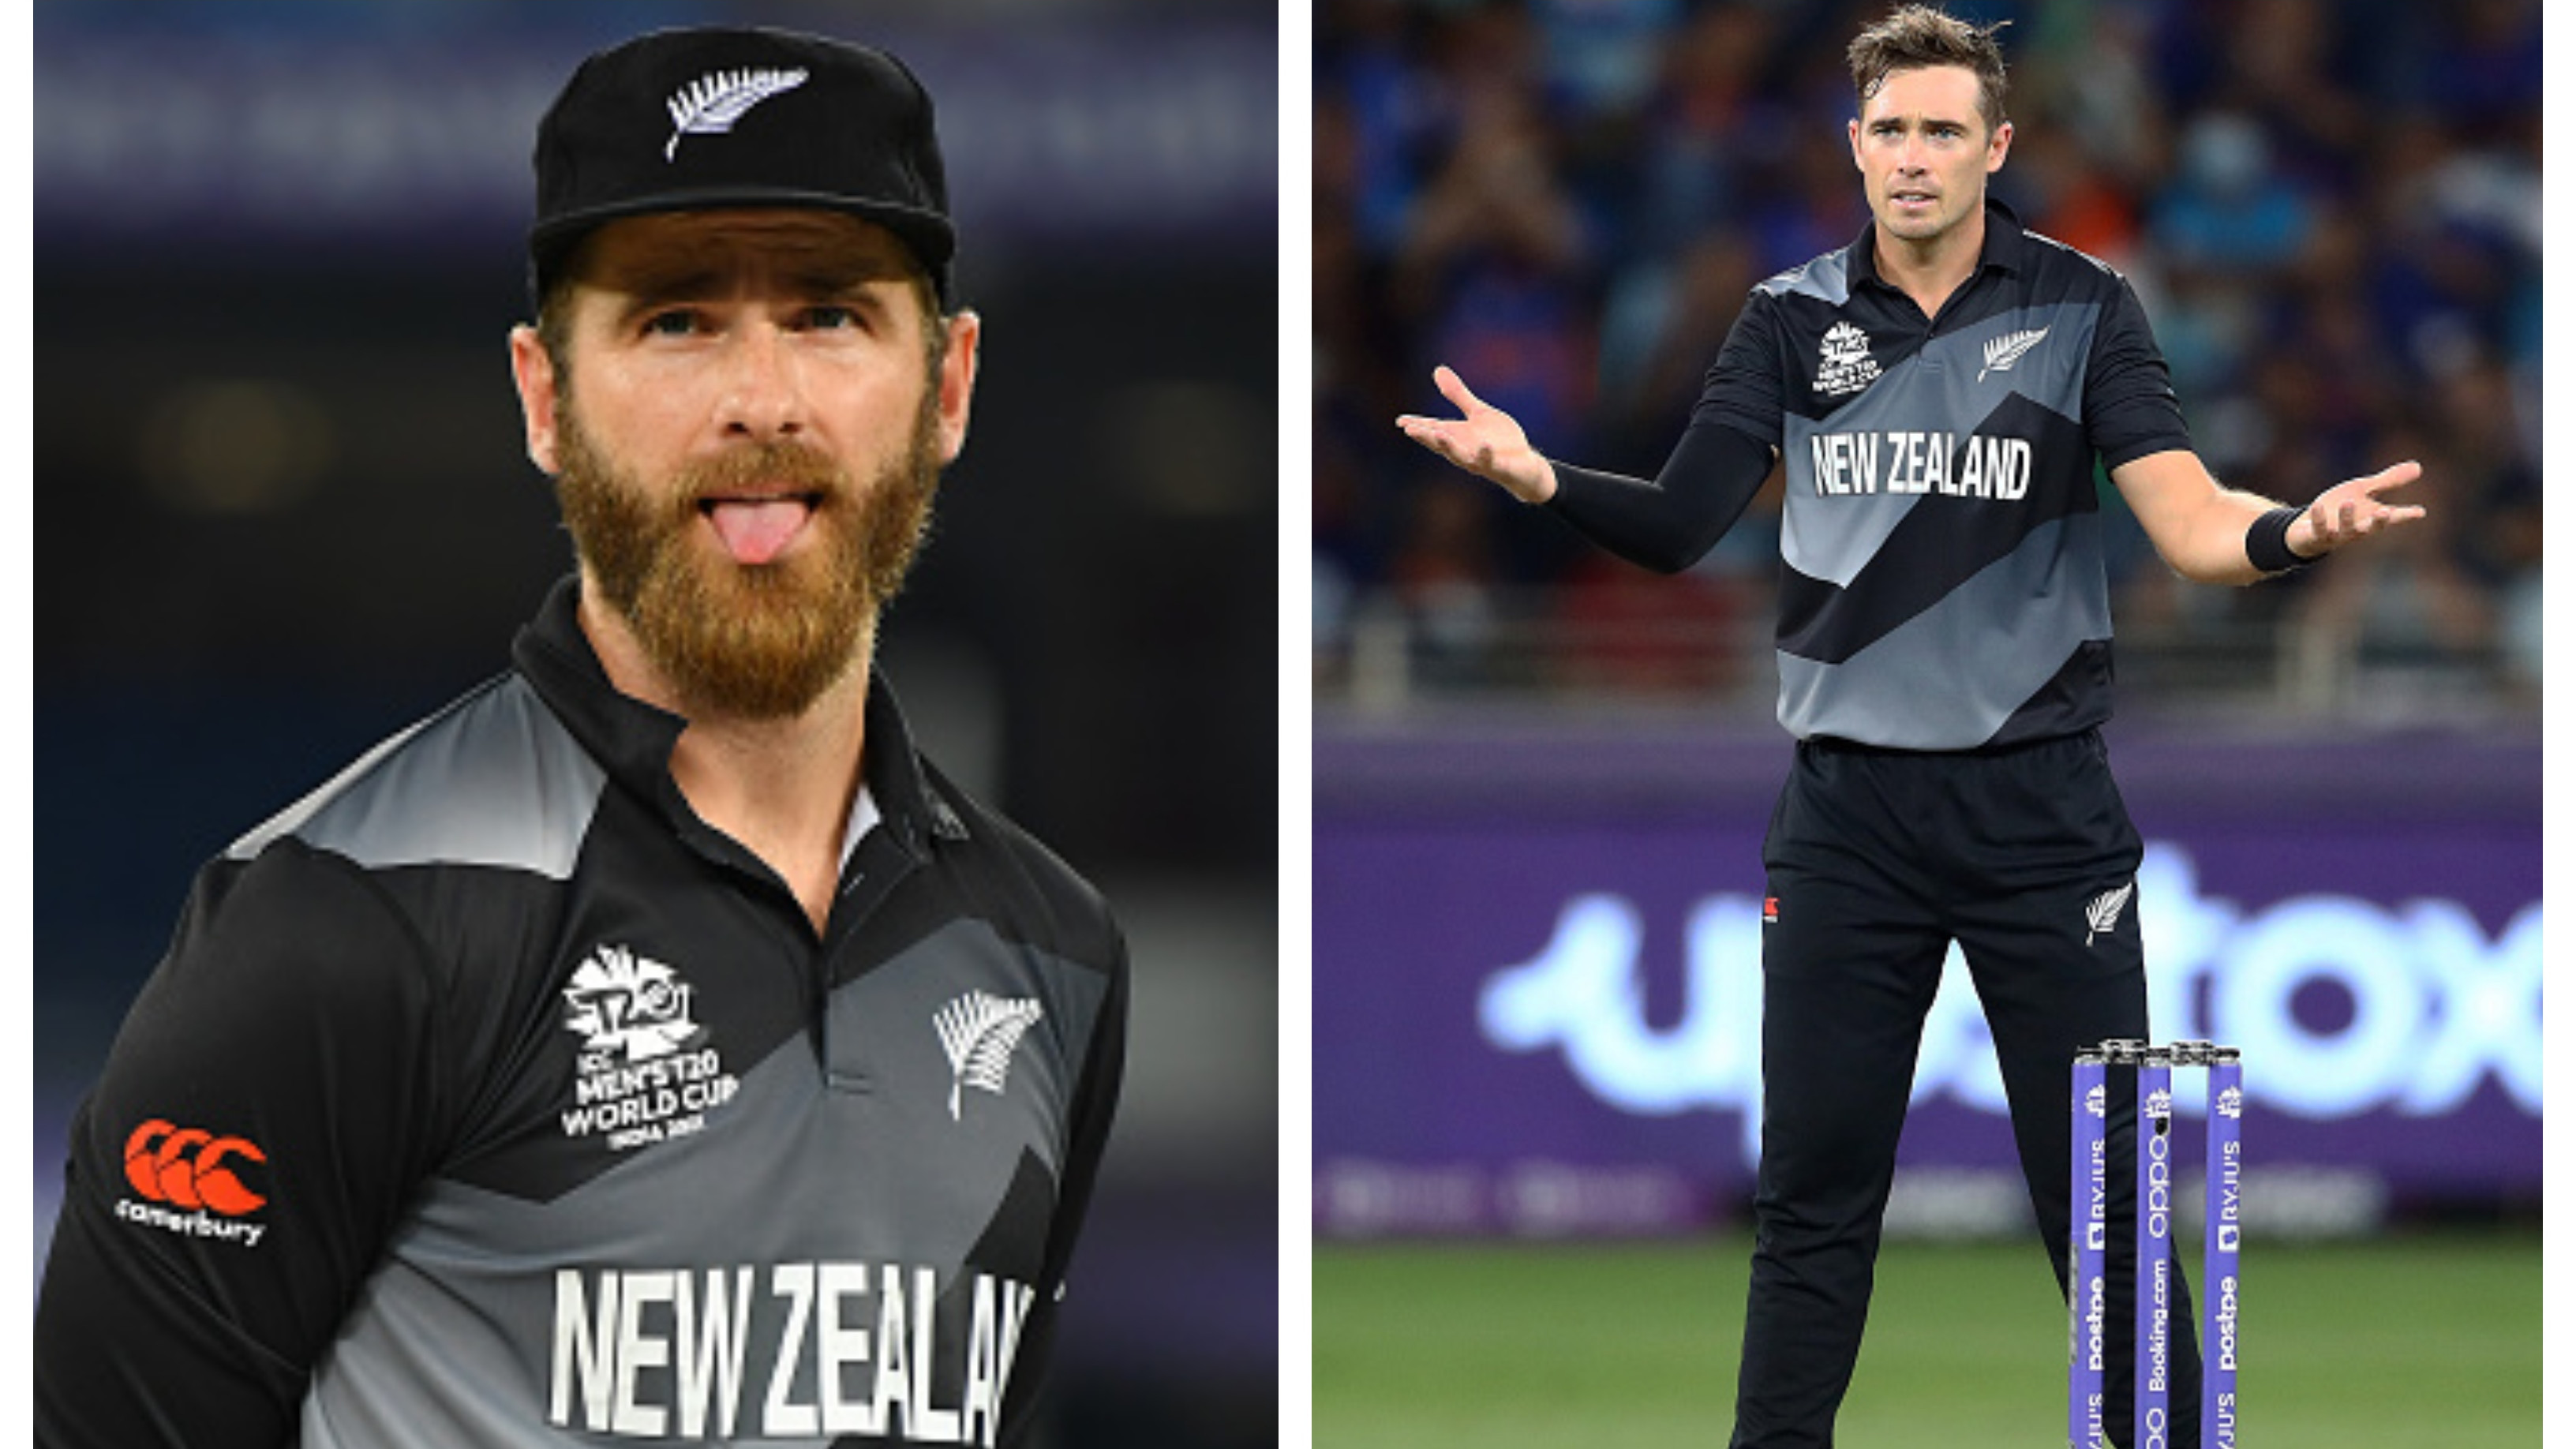 IND v NZ 2021: Kane Williamson to skip T20I series, Tim Southee named captain